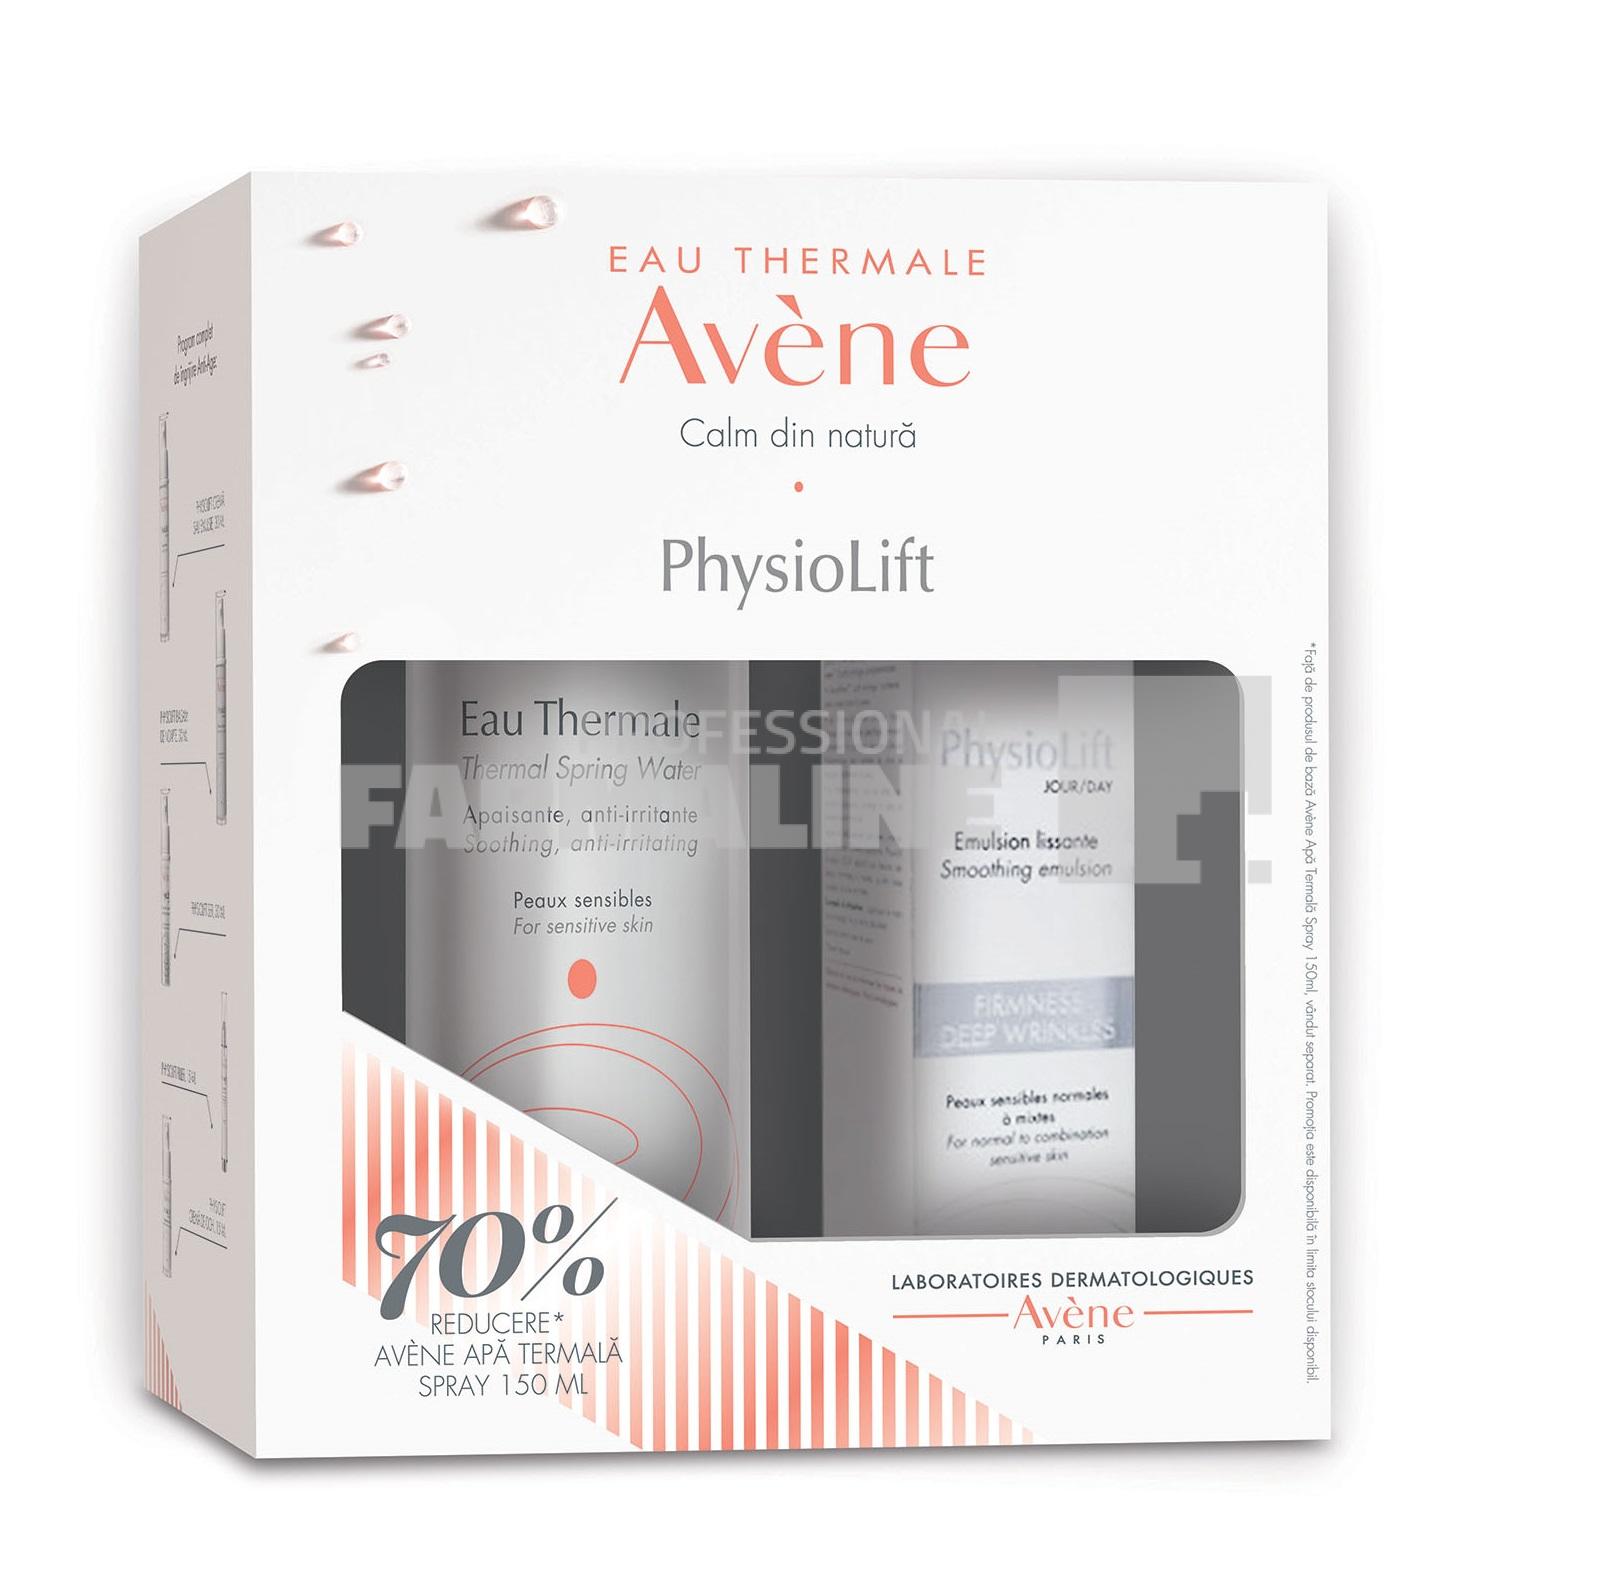 Avene Pachet Physiolift Emulsie anti-age 30 ml + 70% reducere Apa Termala 150 ml